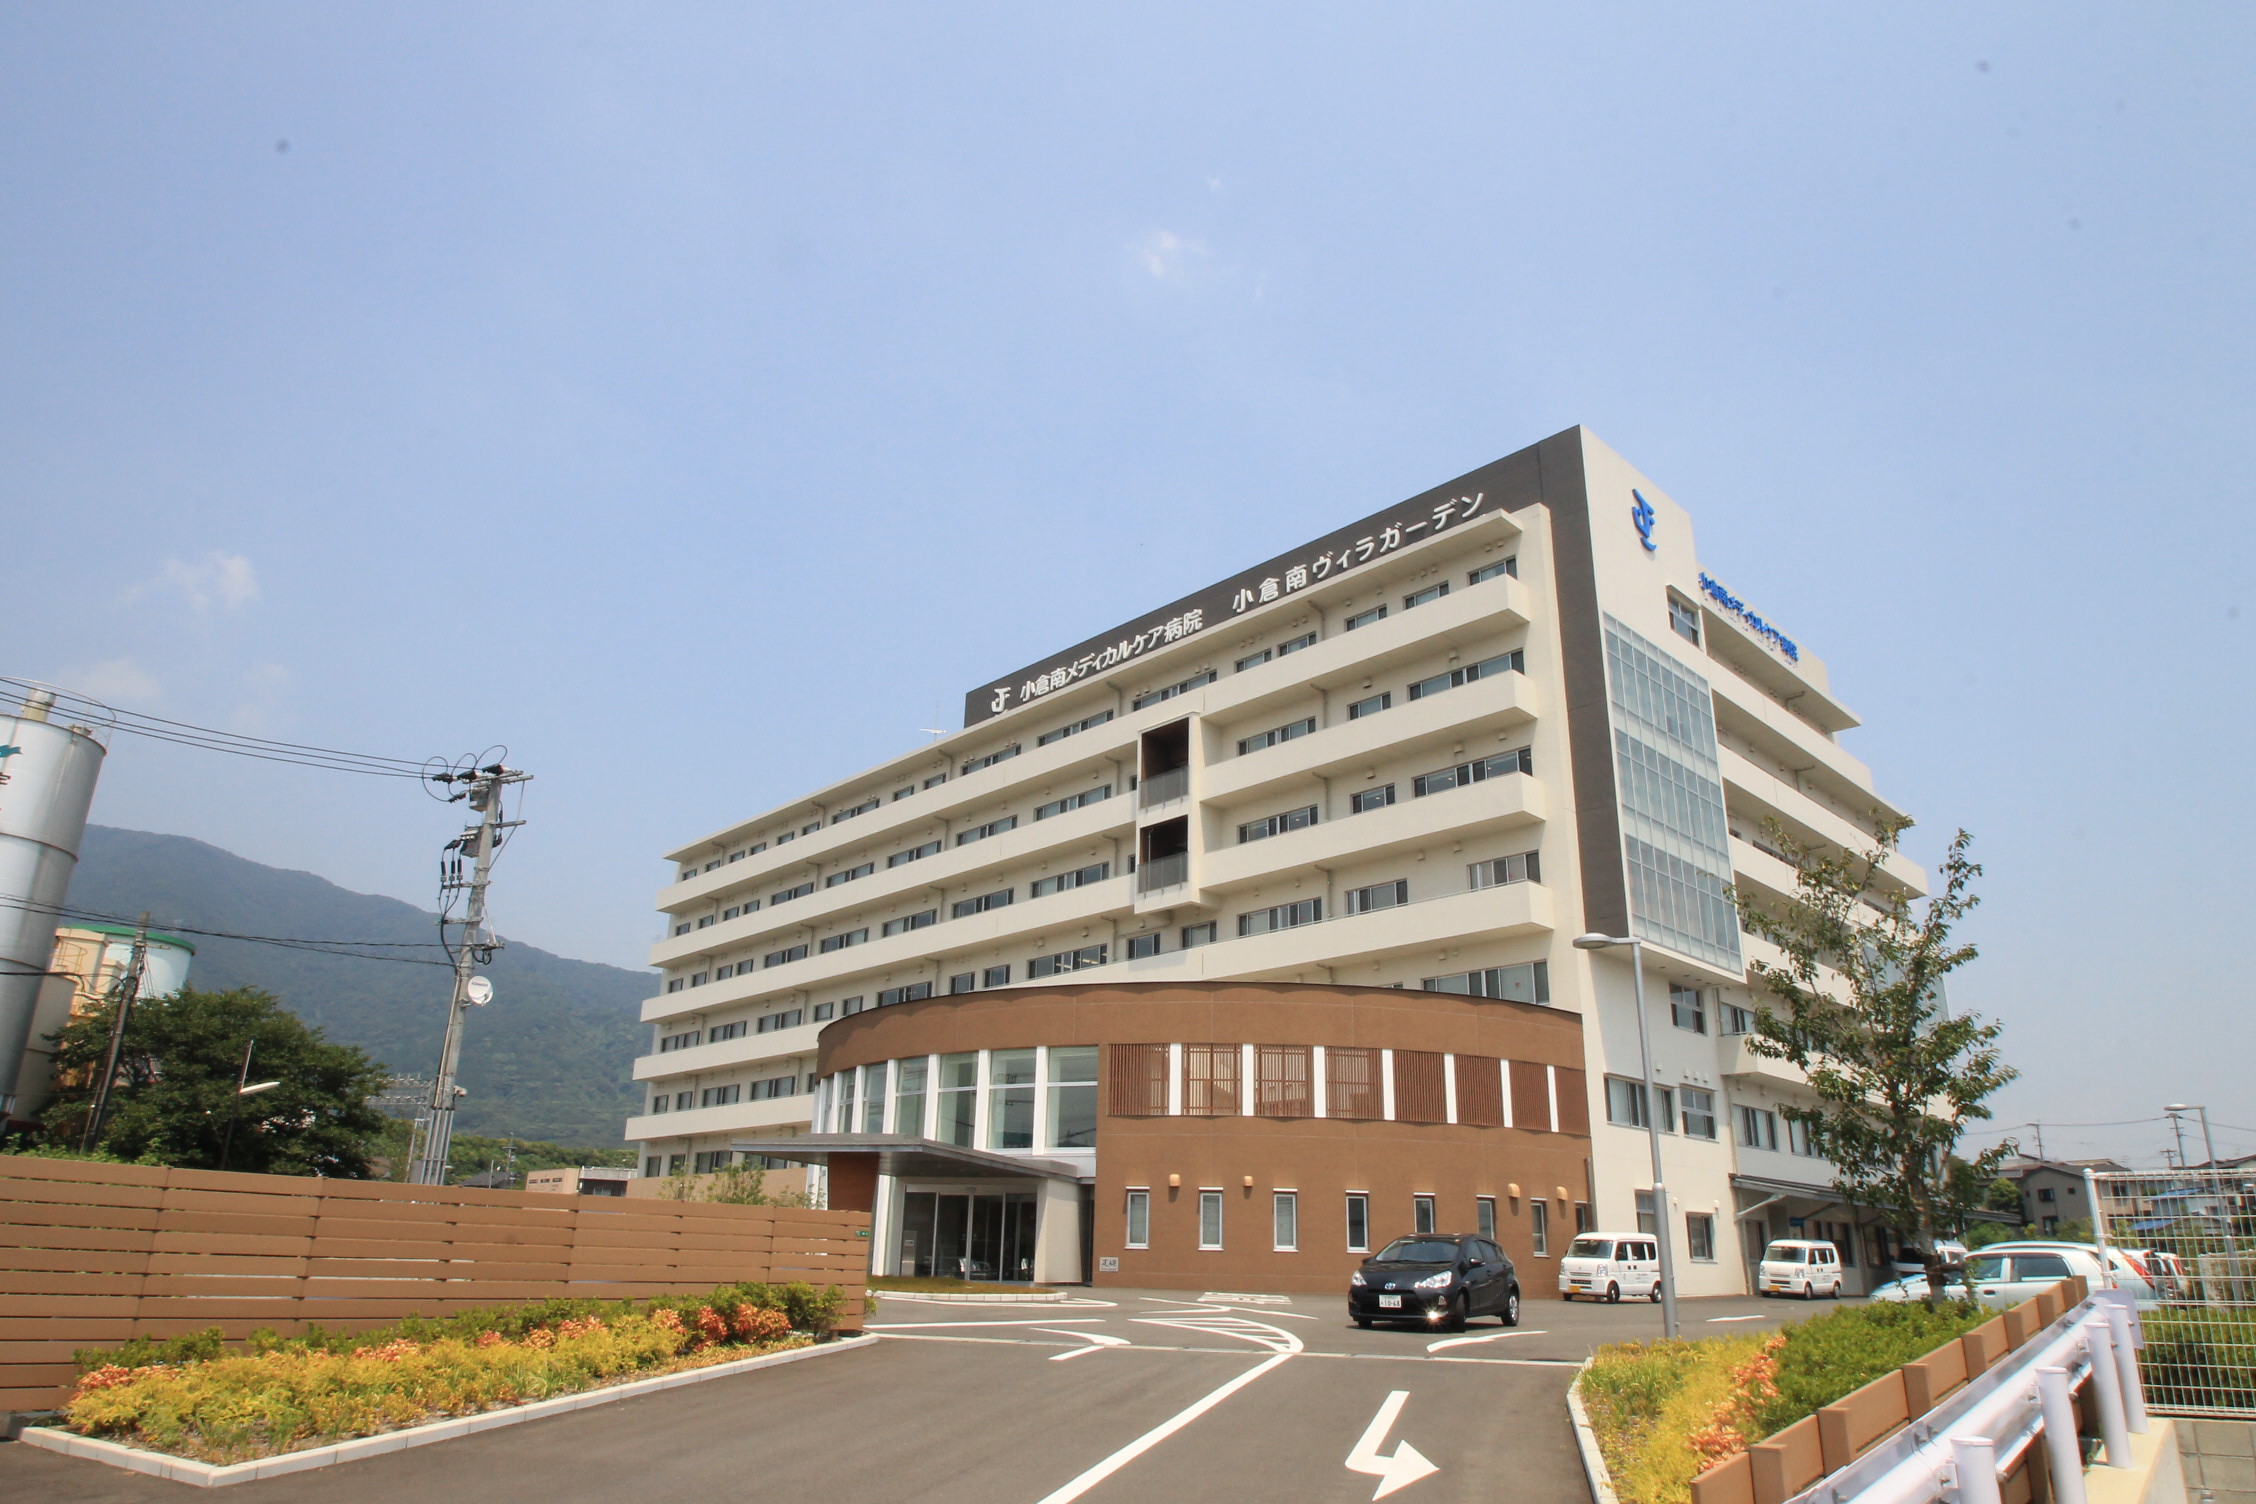 Hospital. 962m until the medical corporation Association AkiraAi Board Kokuraminami Medical care hospital (hospital)